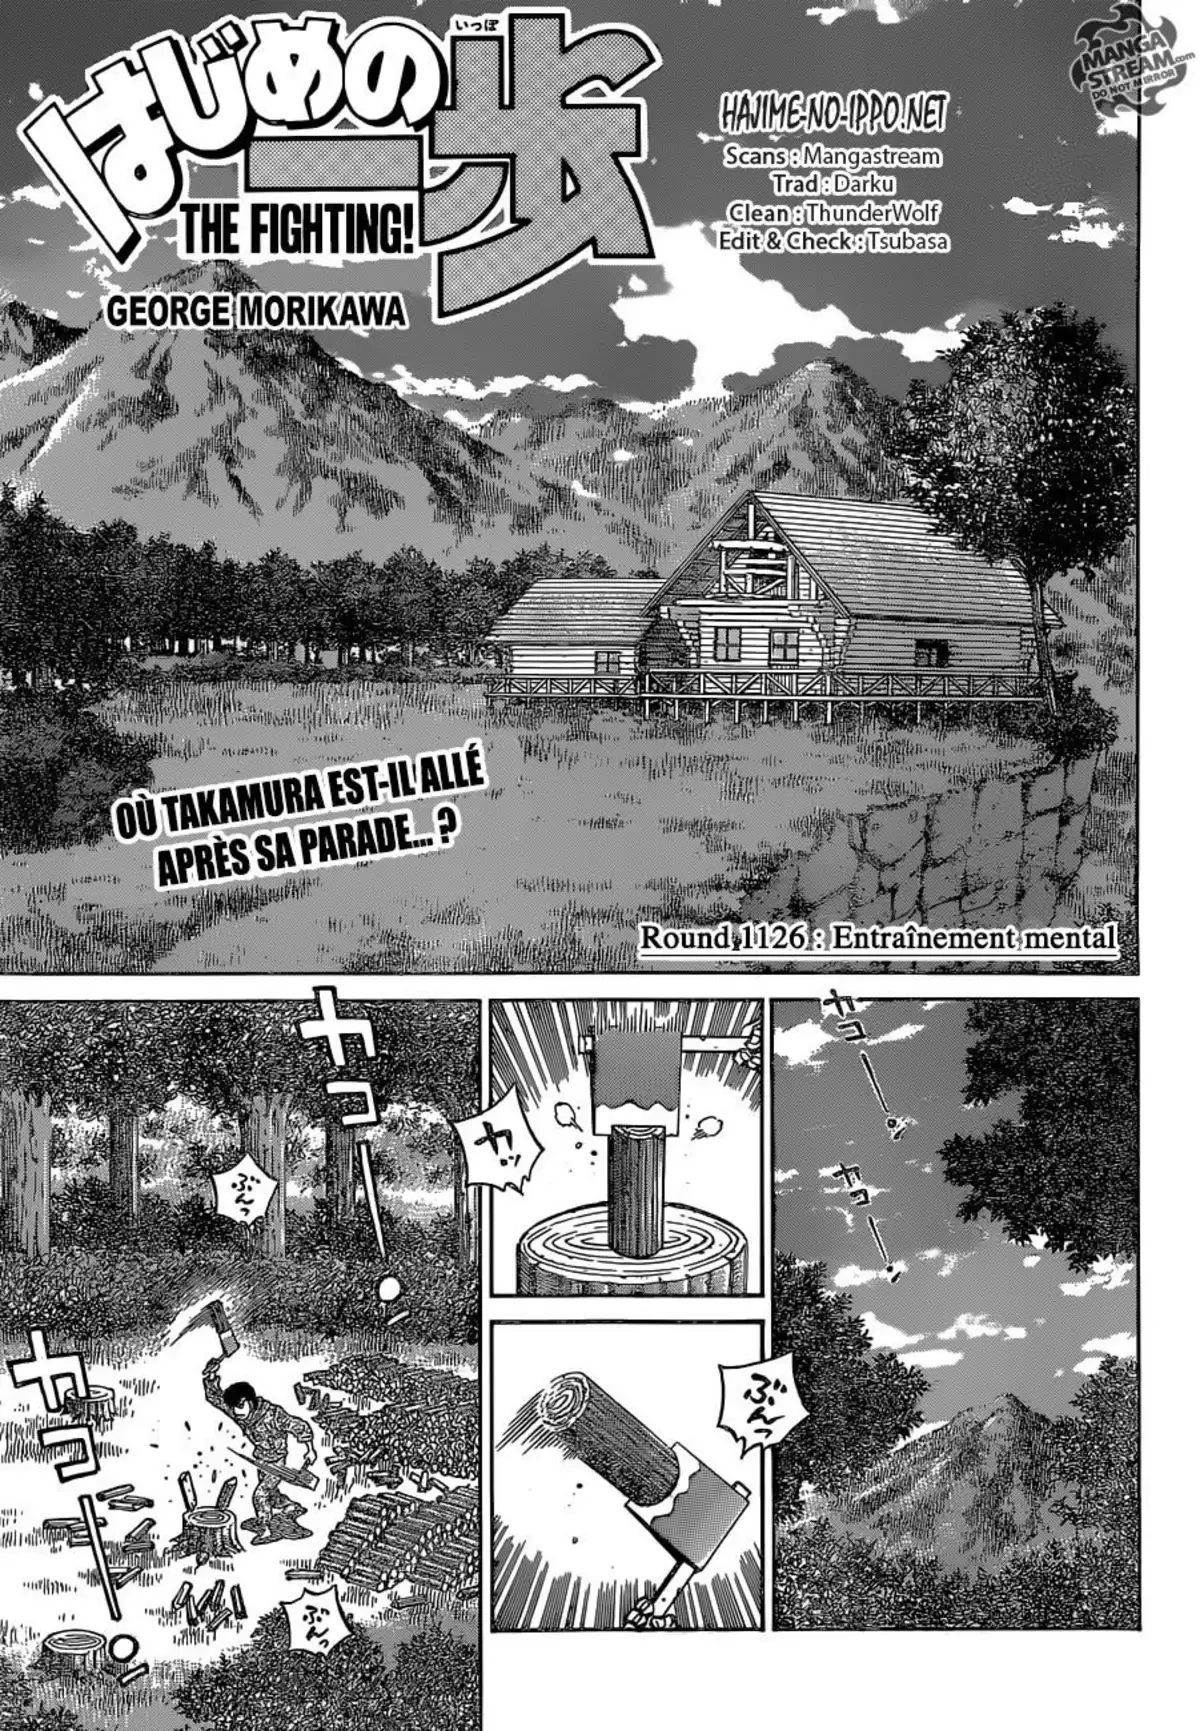 Hajime no Ippo Volume 114 page 2